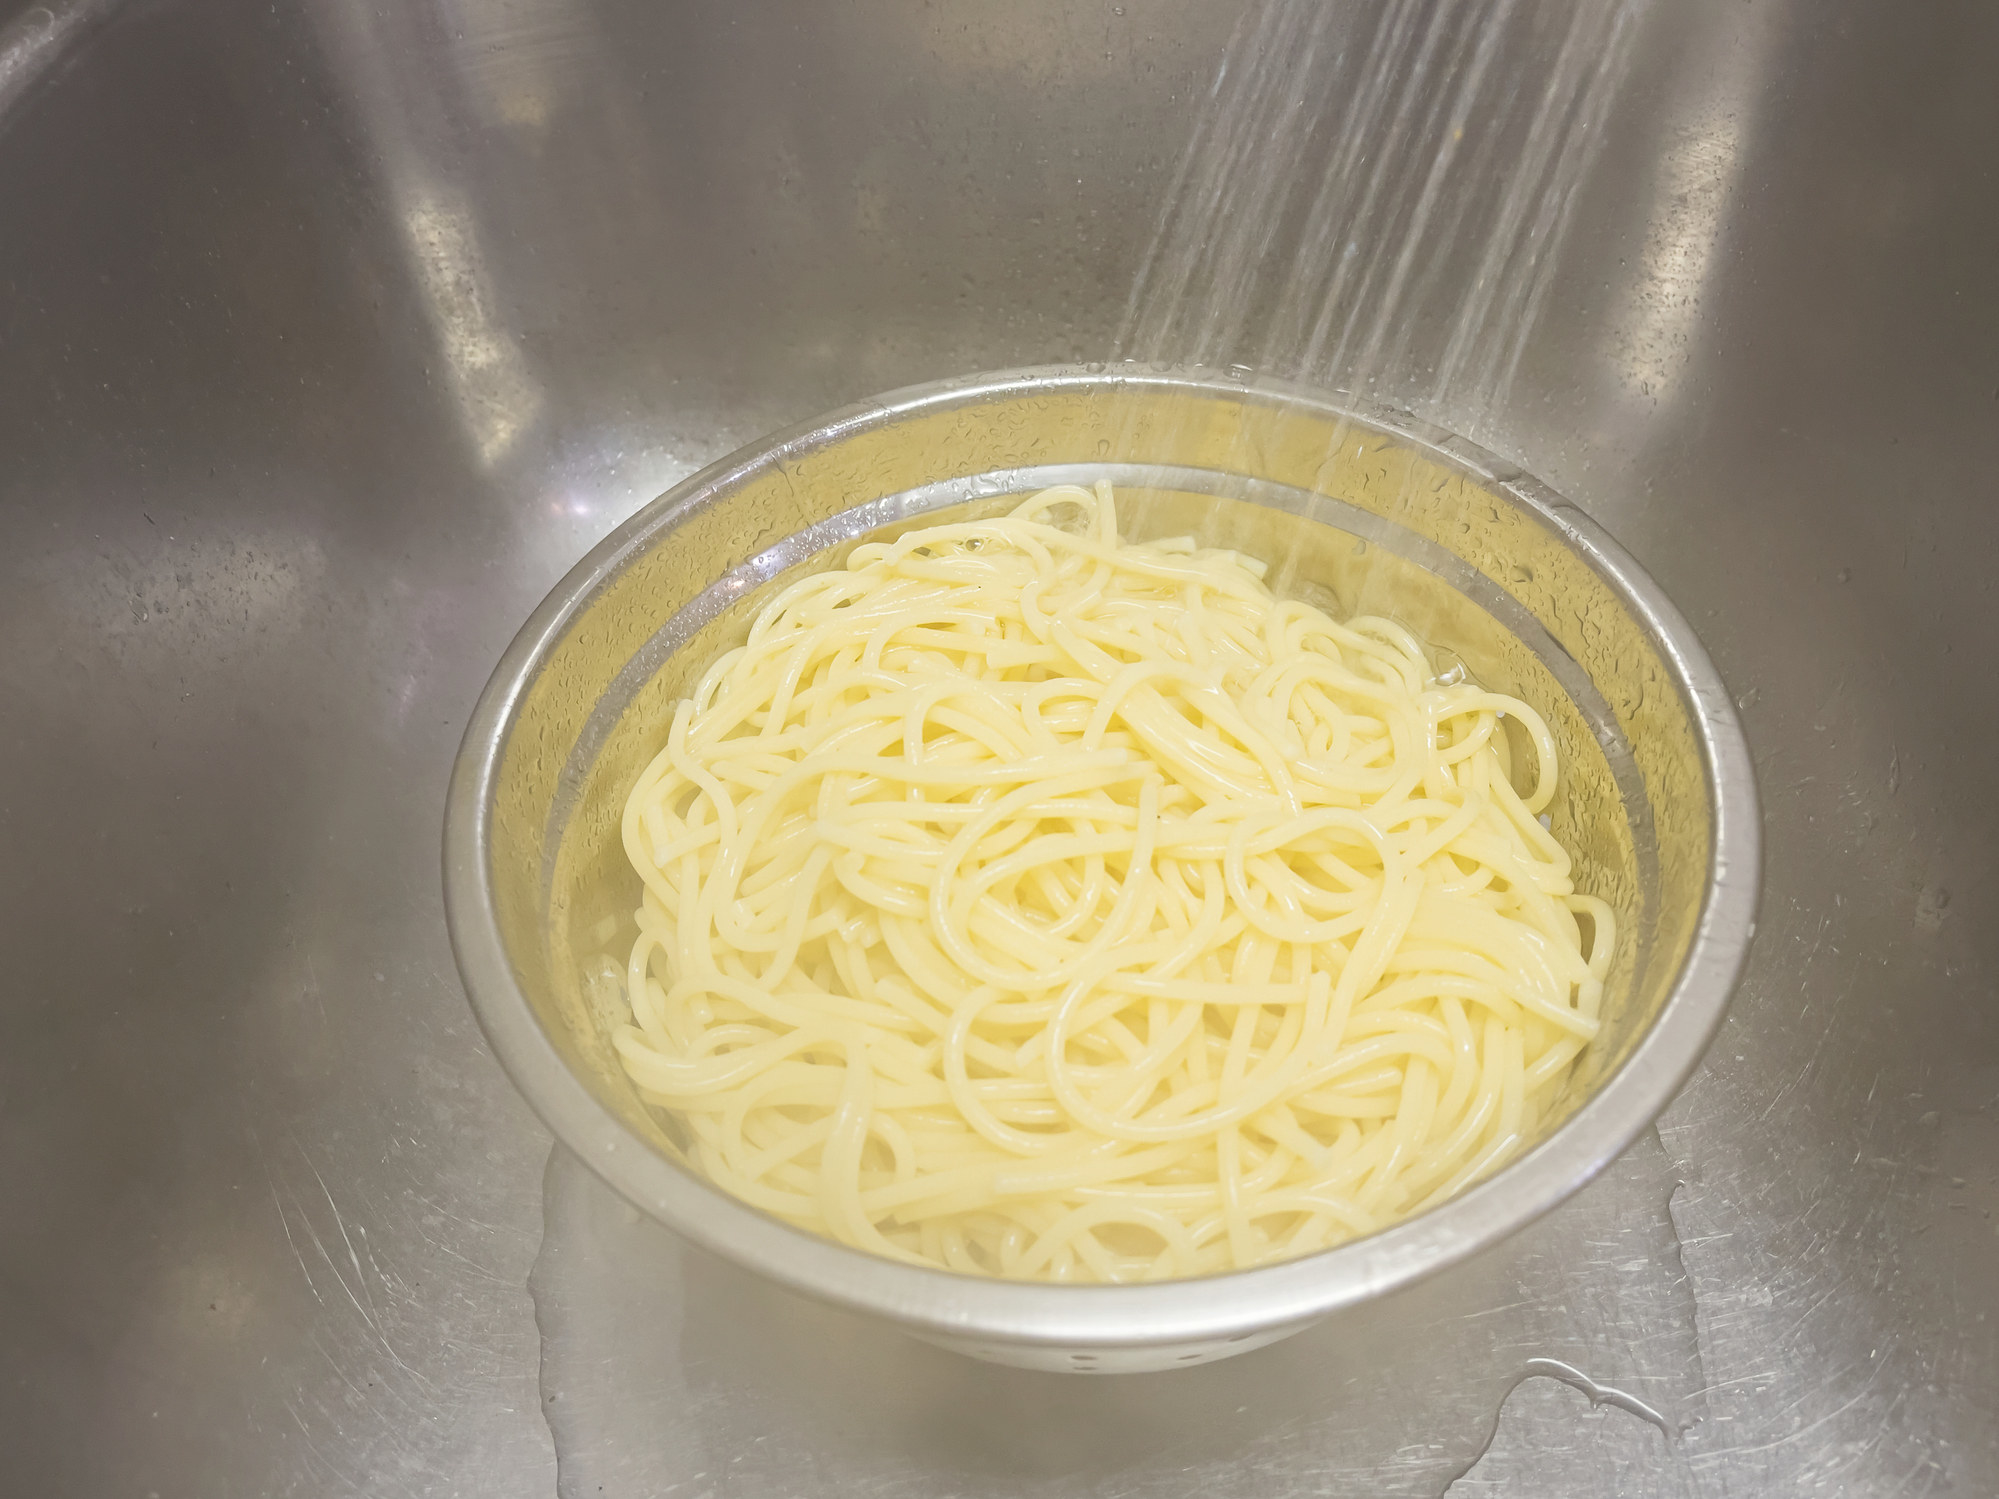 spaghetti in a bowl